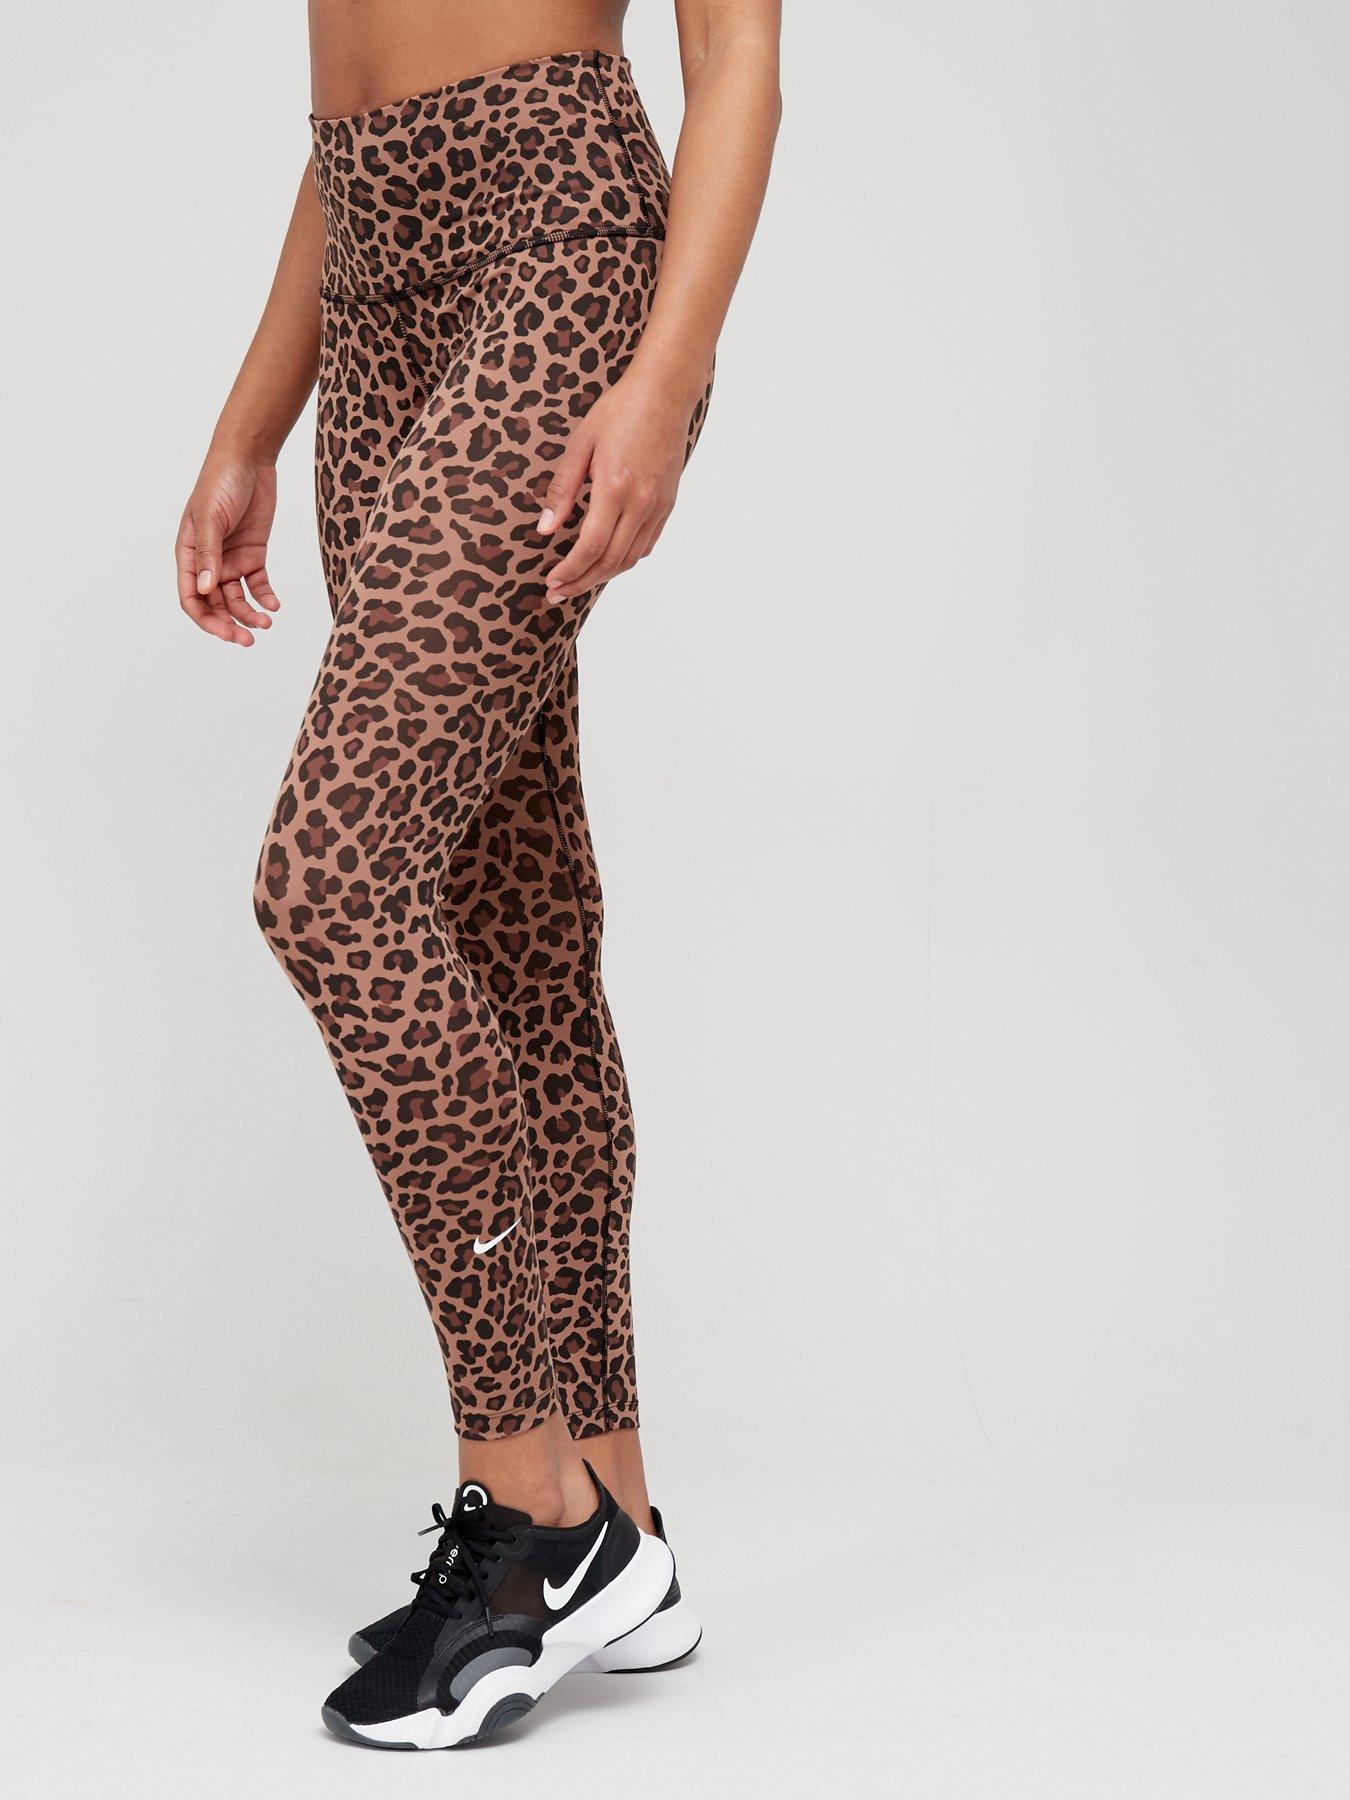 Patterned Leggings, Leopard Print Leggings